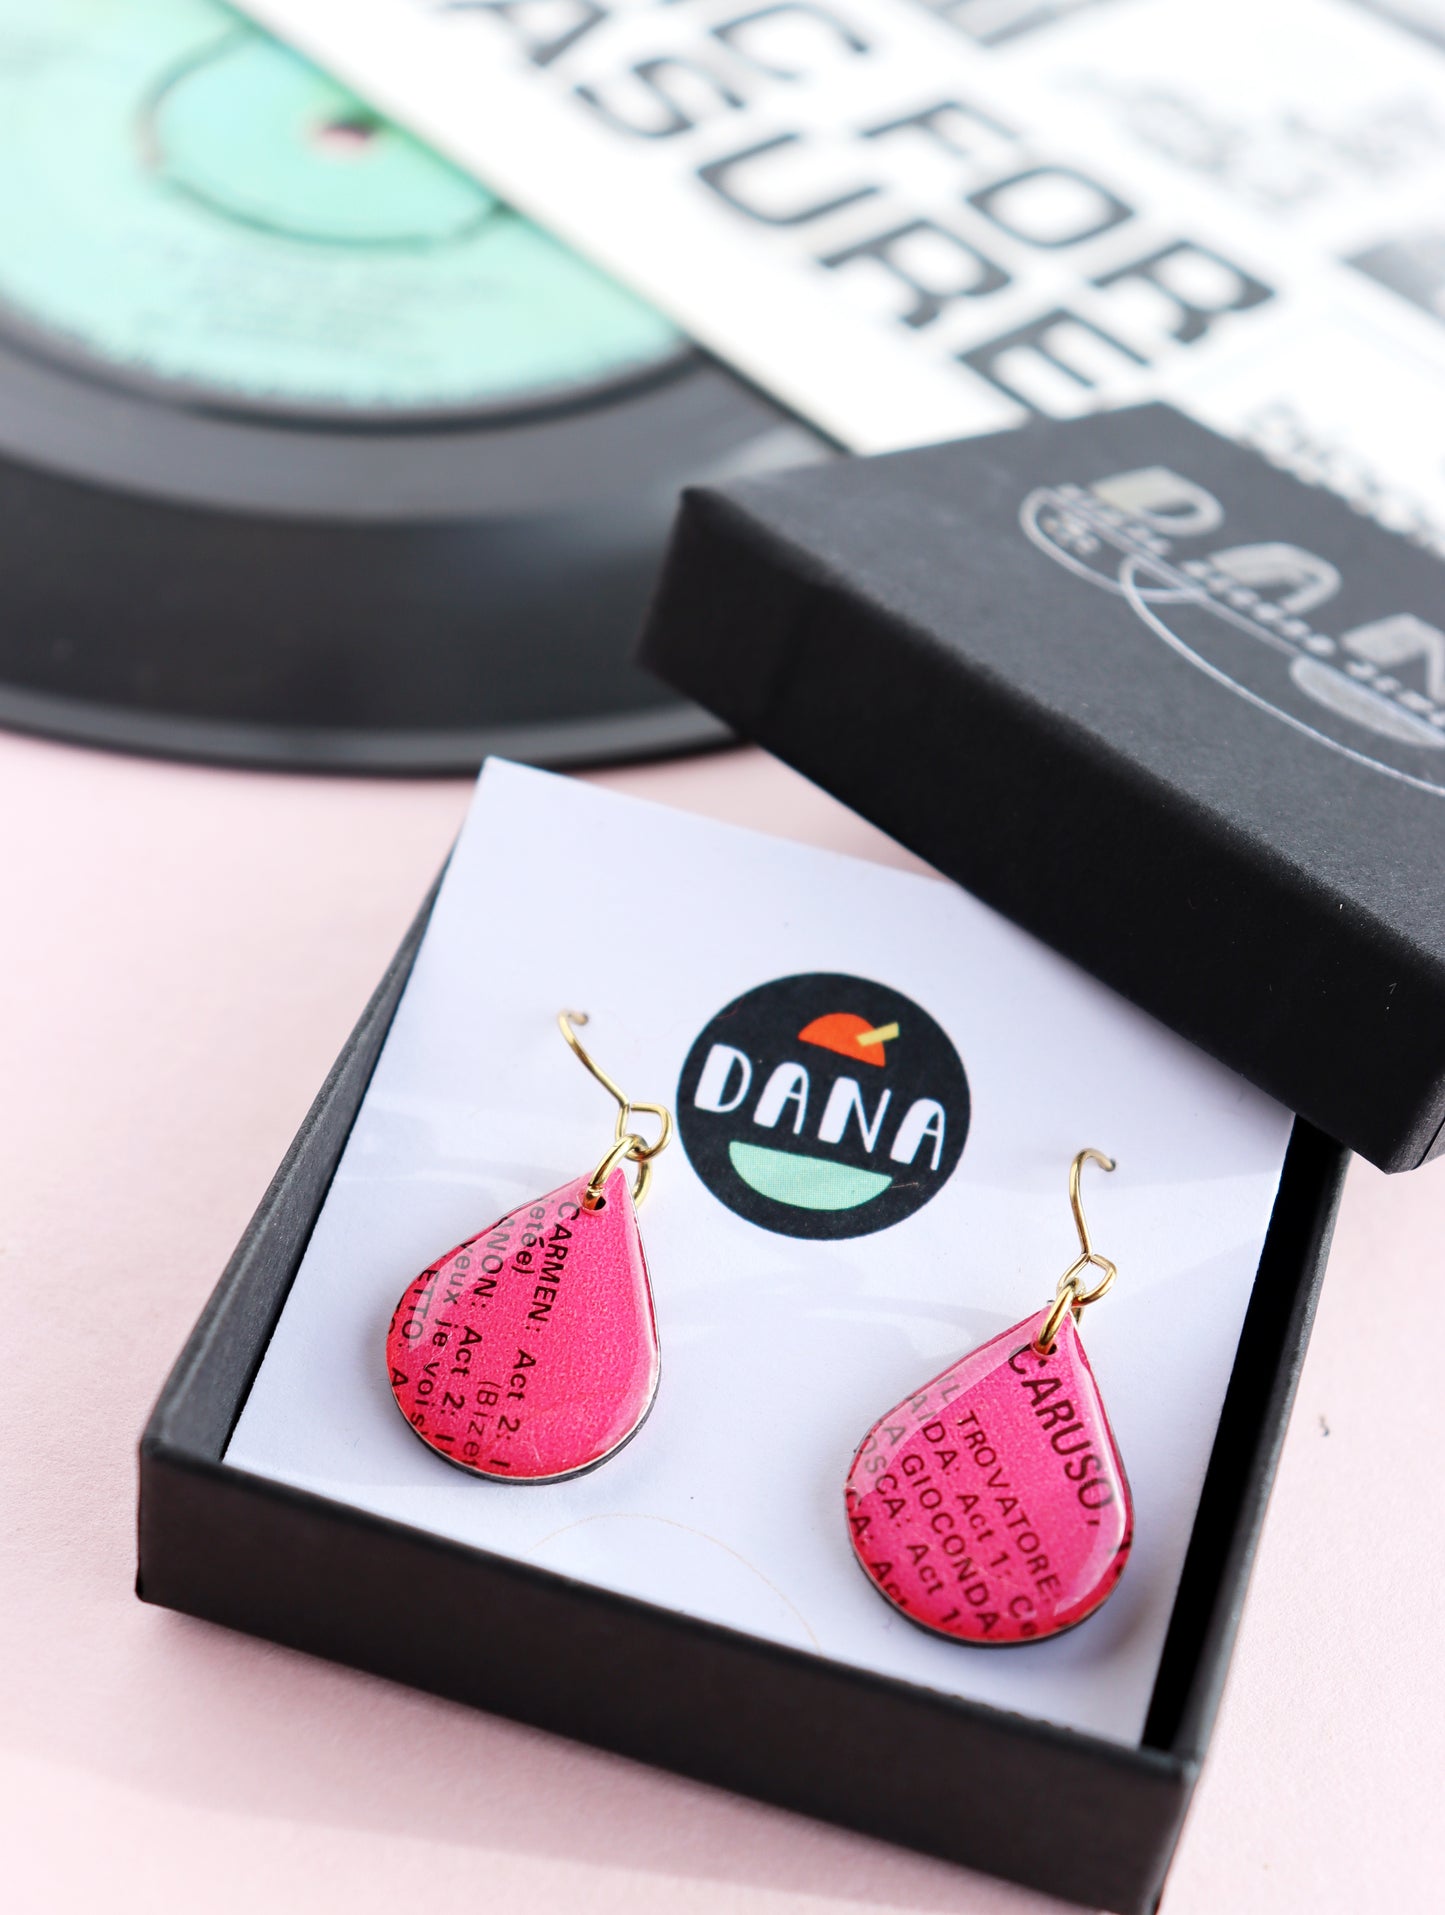 Small repurposed vinyl record teardrop earrings in fab fuchsia pink